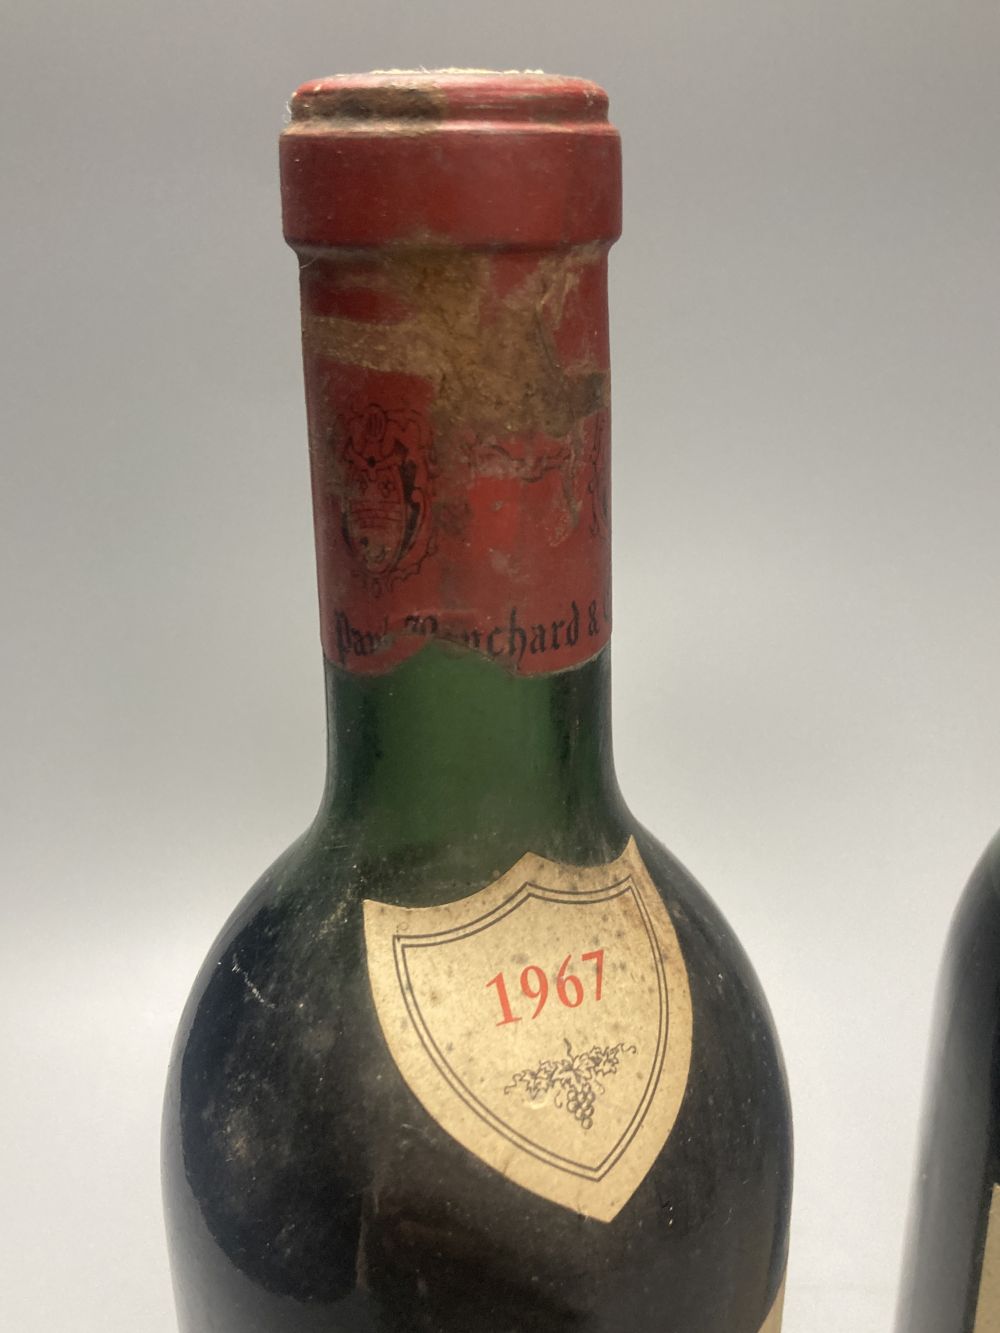 Two bottles of St Emilion 1967